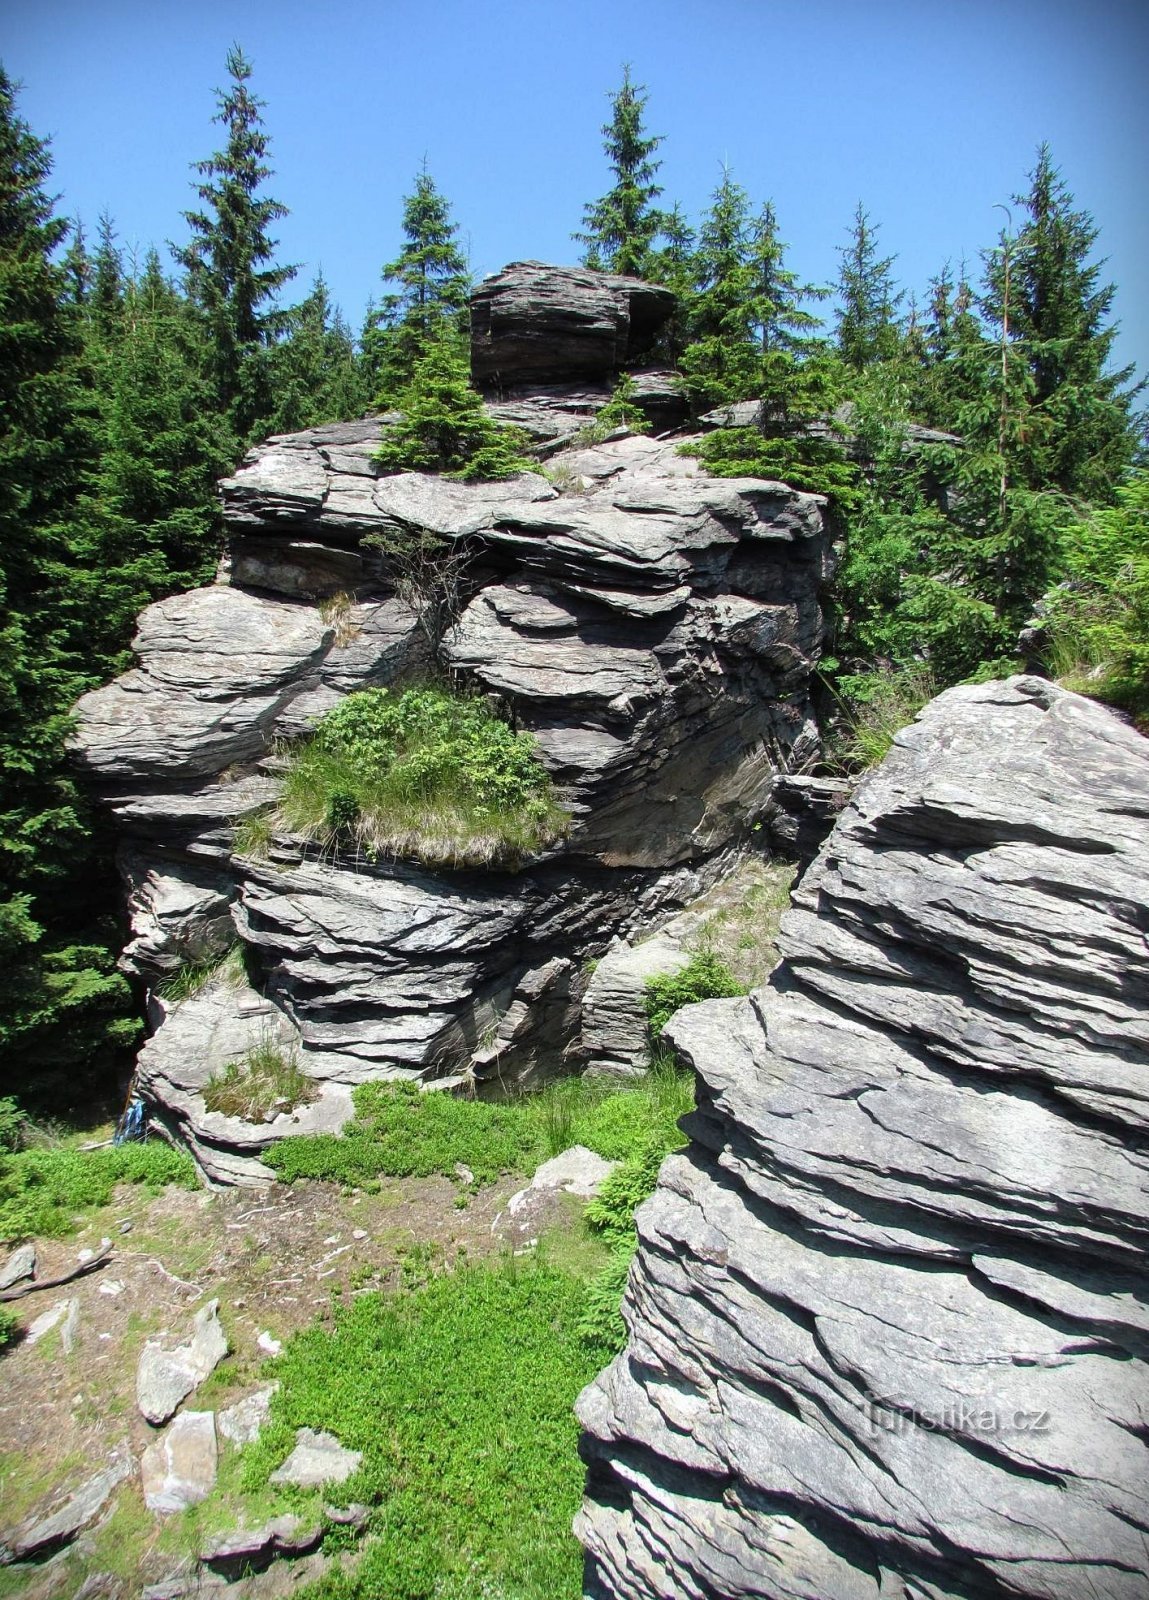 Del mundo de las rocas notables de Hrubé Jeseník - parte 3